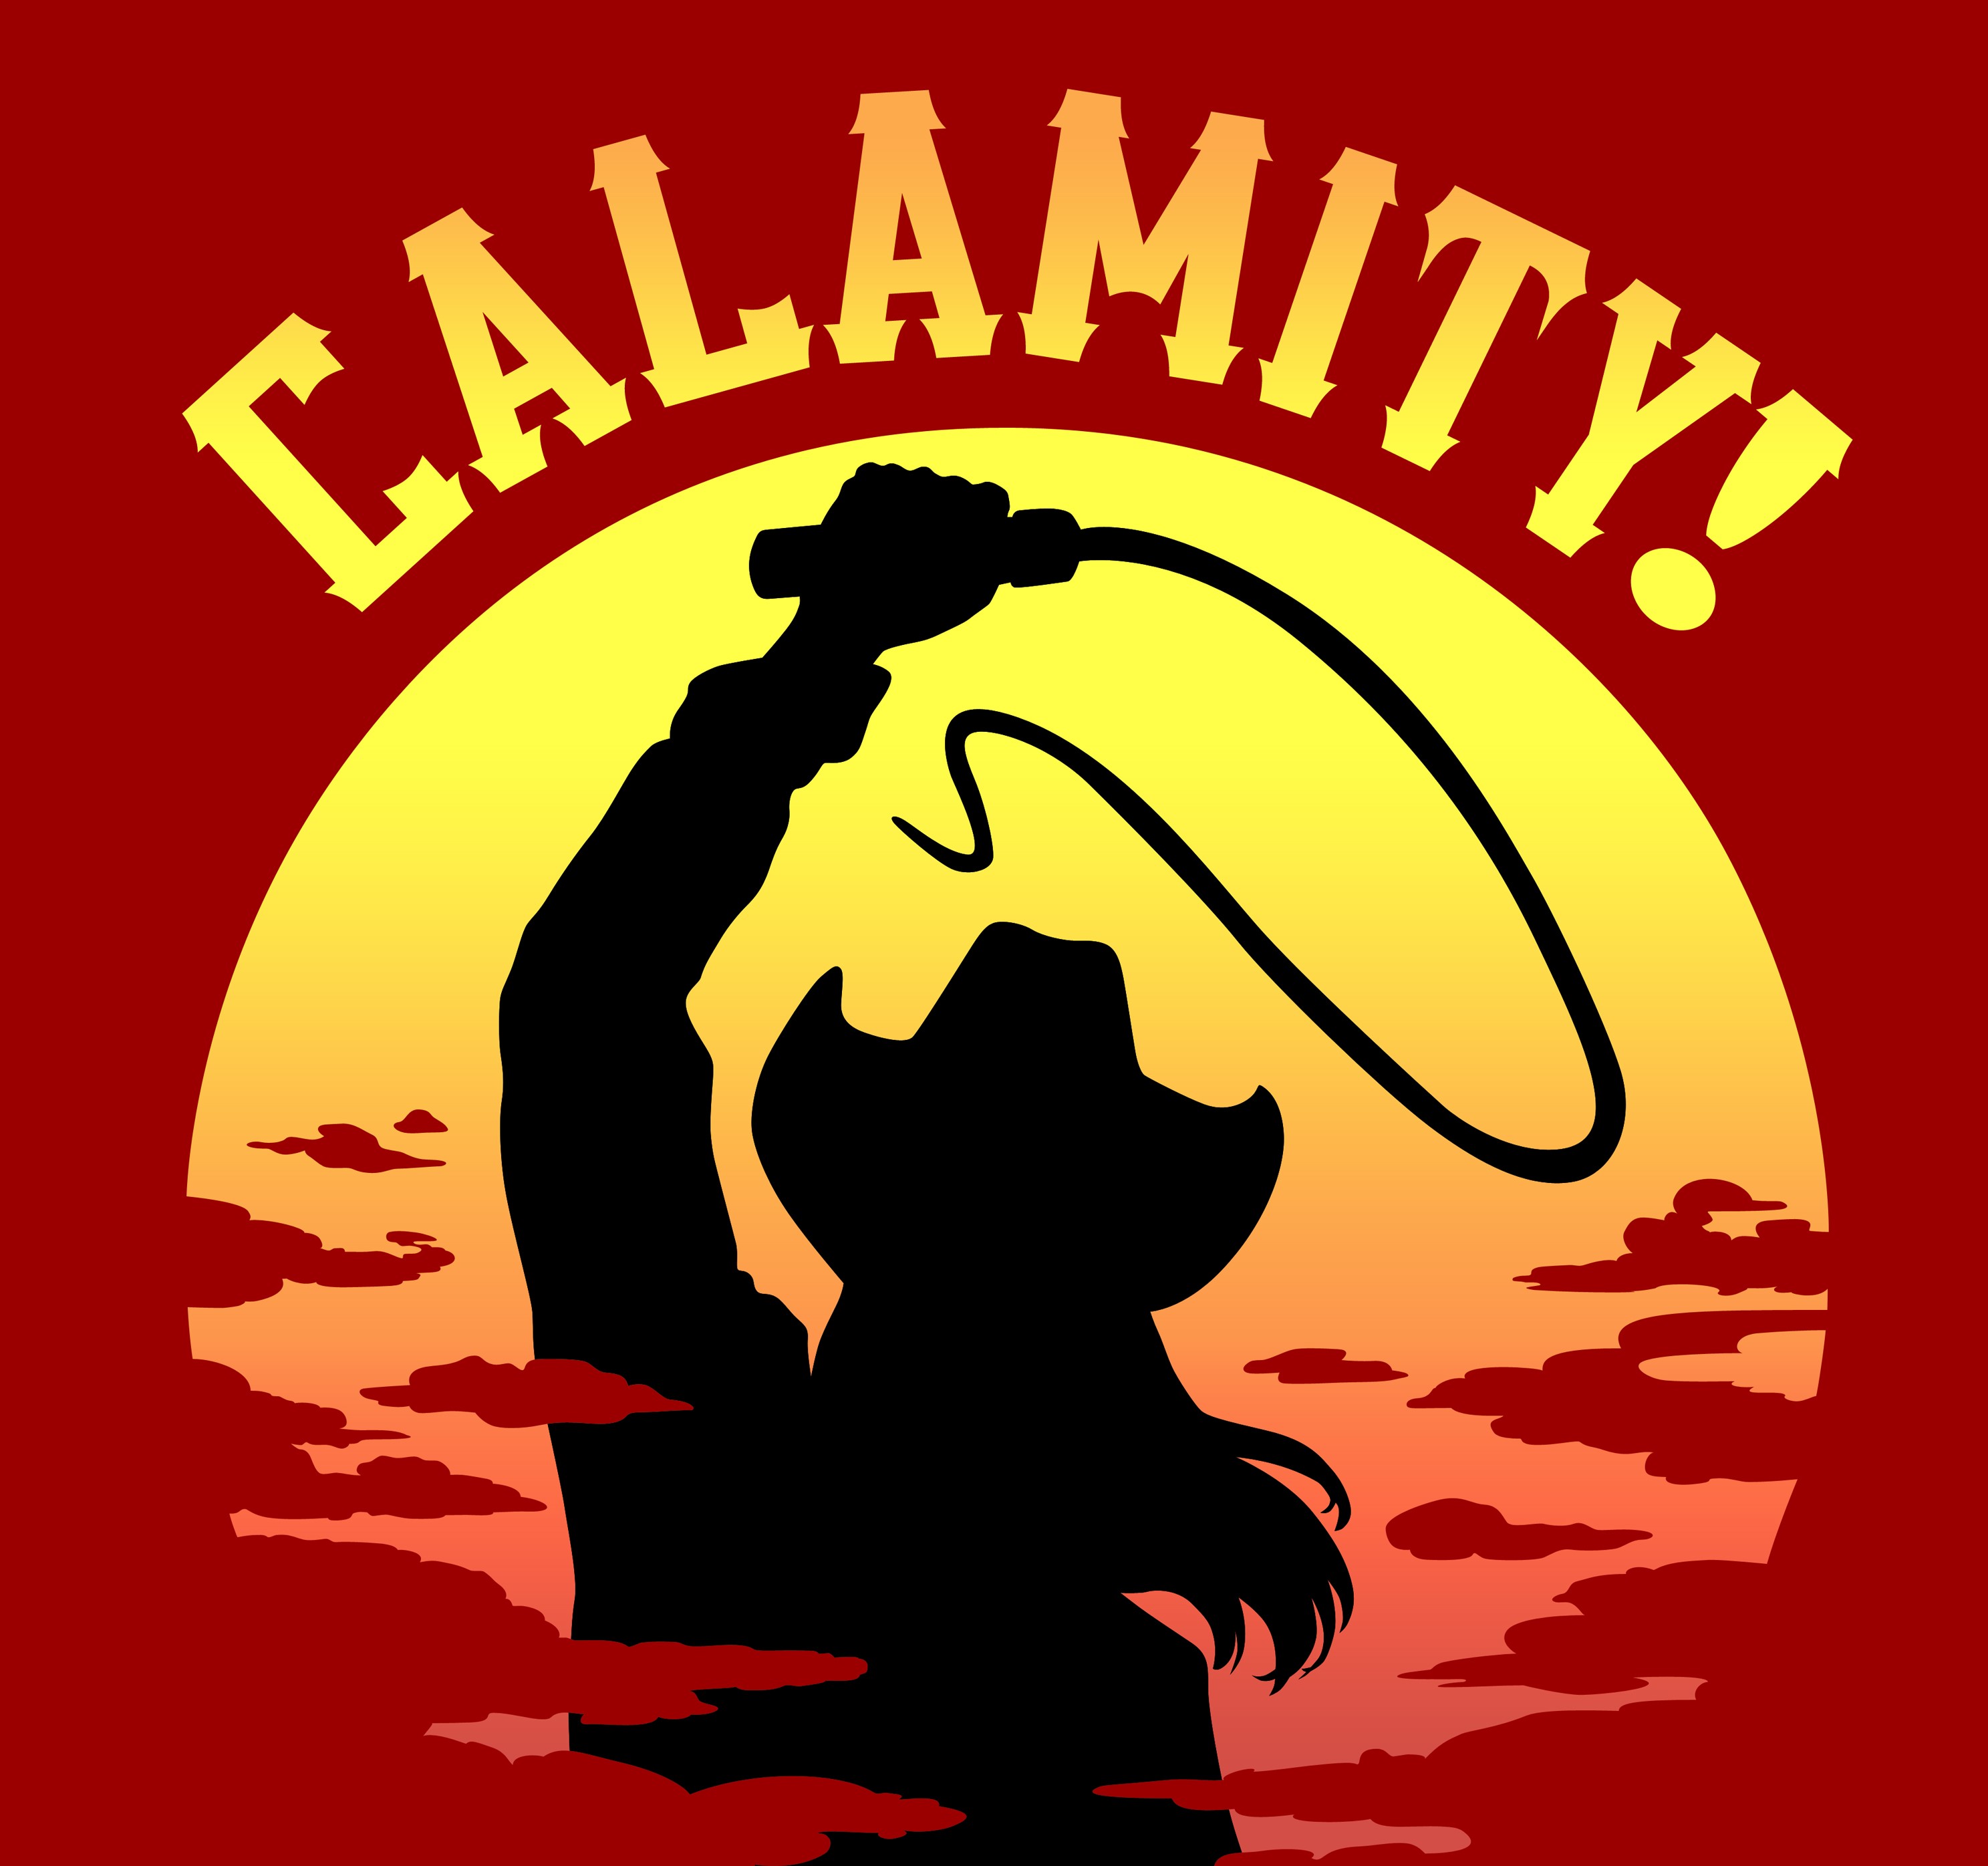 Calamity Show Links